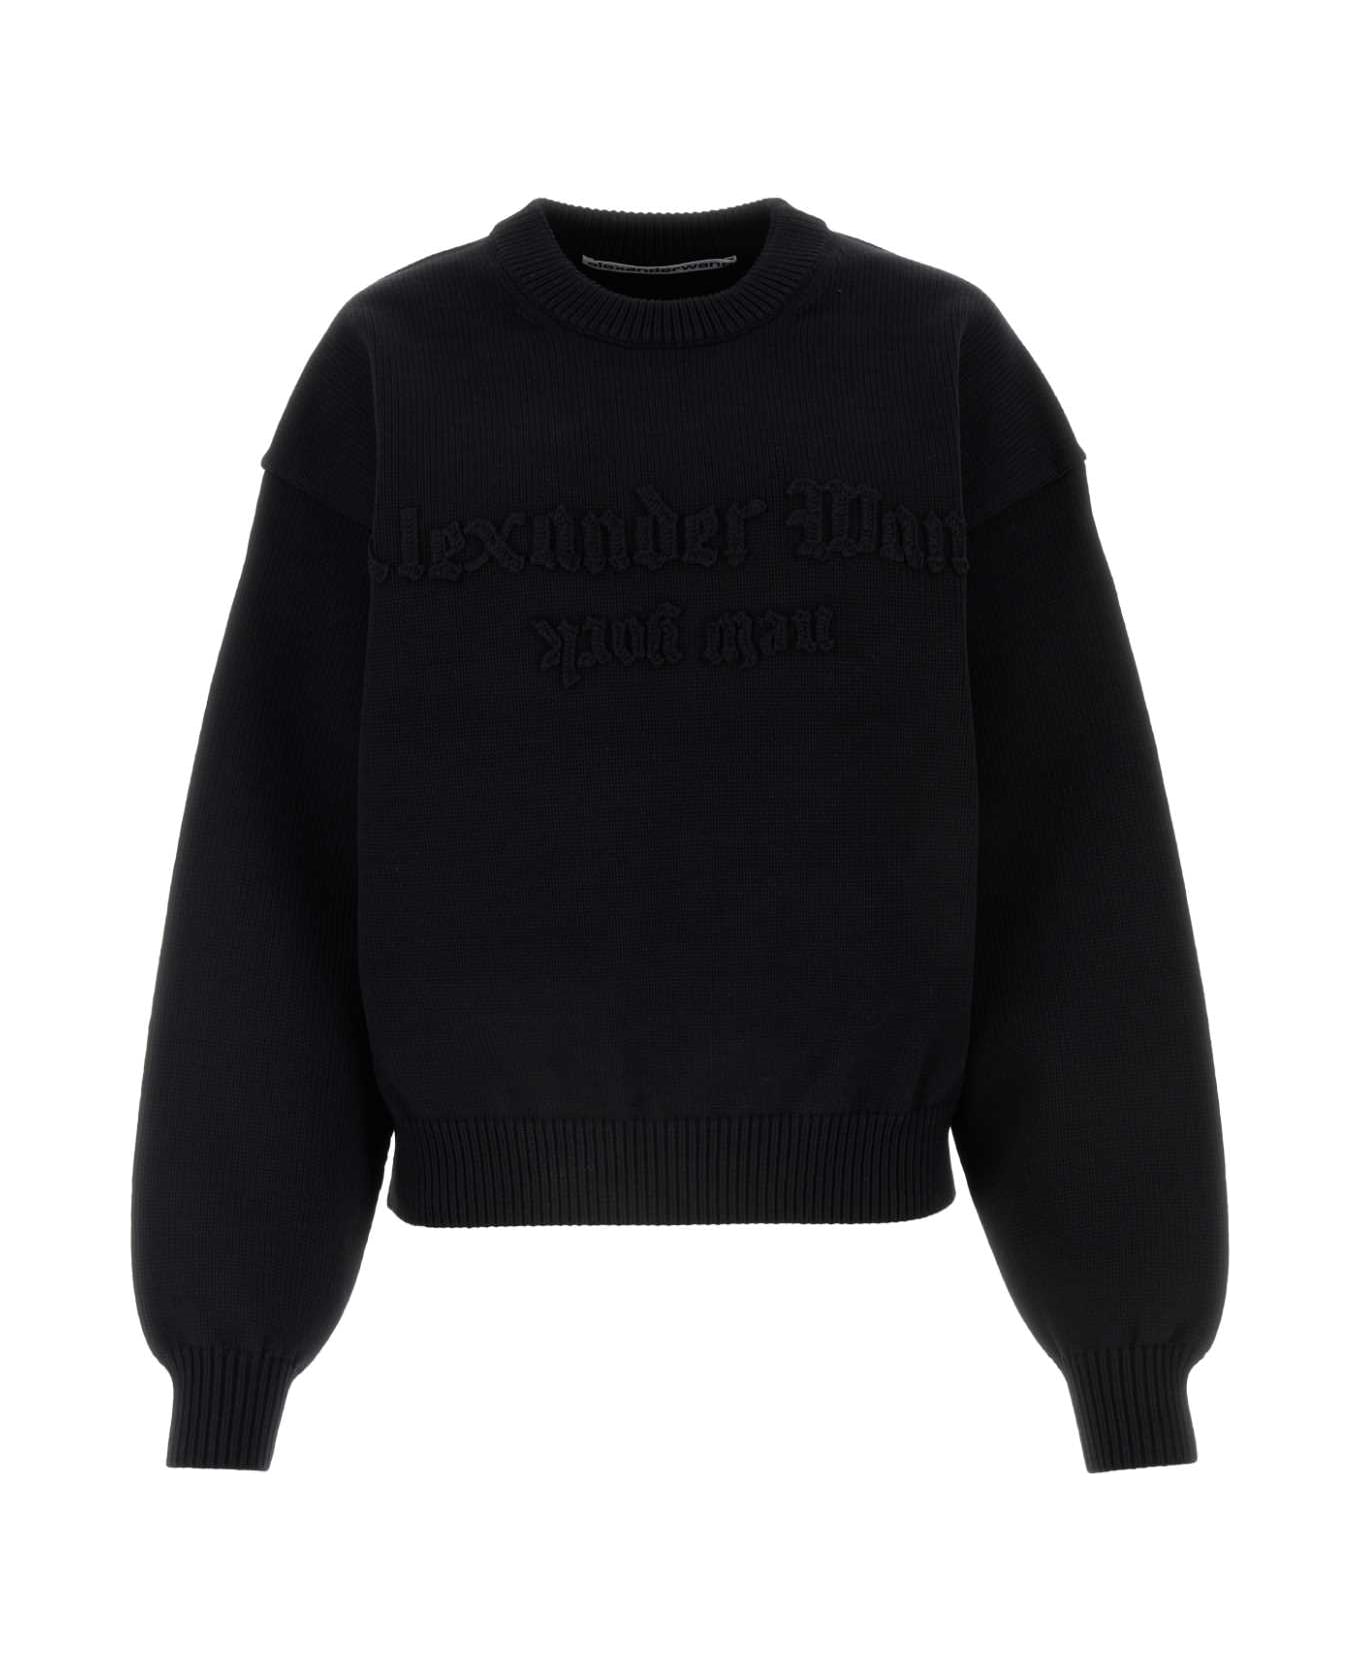 Alexander Wang Black Stretch Cotton Blend Sweater - BLACK